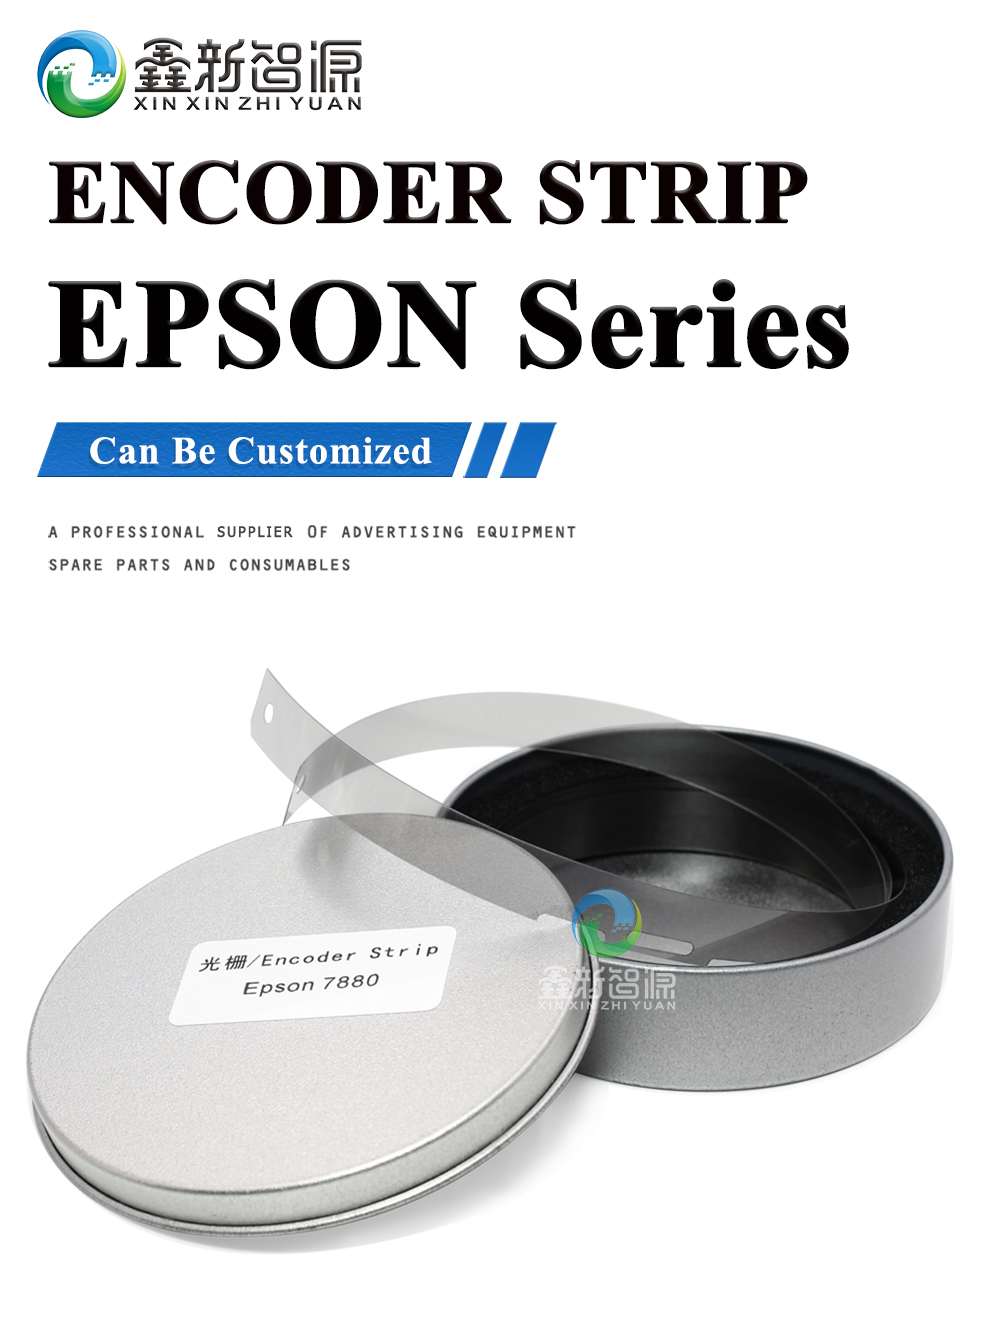 EPSON Series Encoder Strip